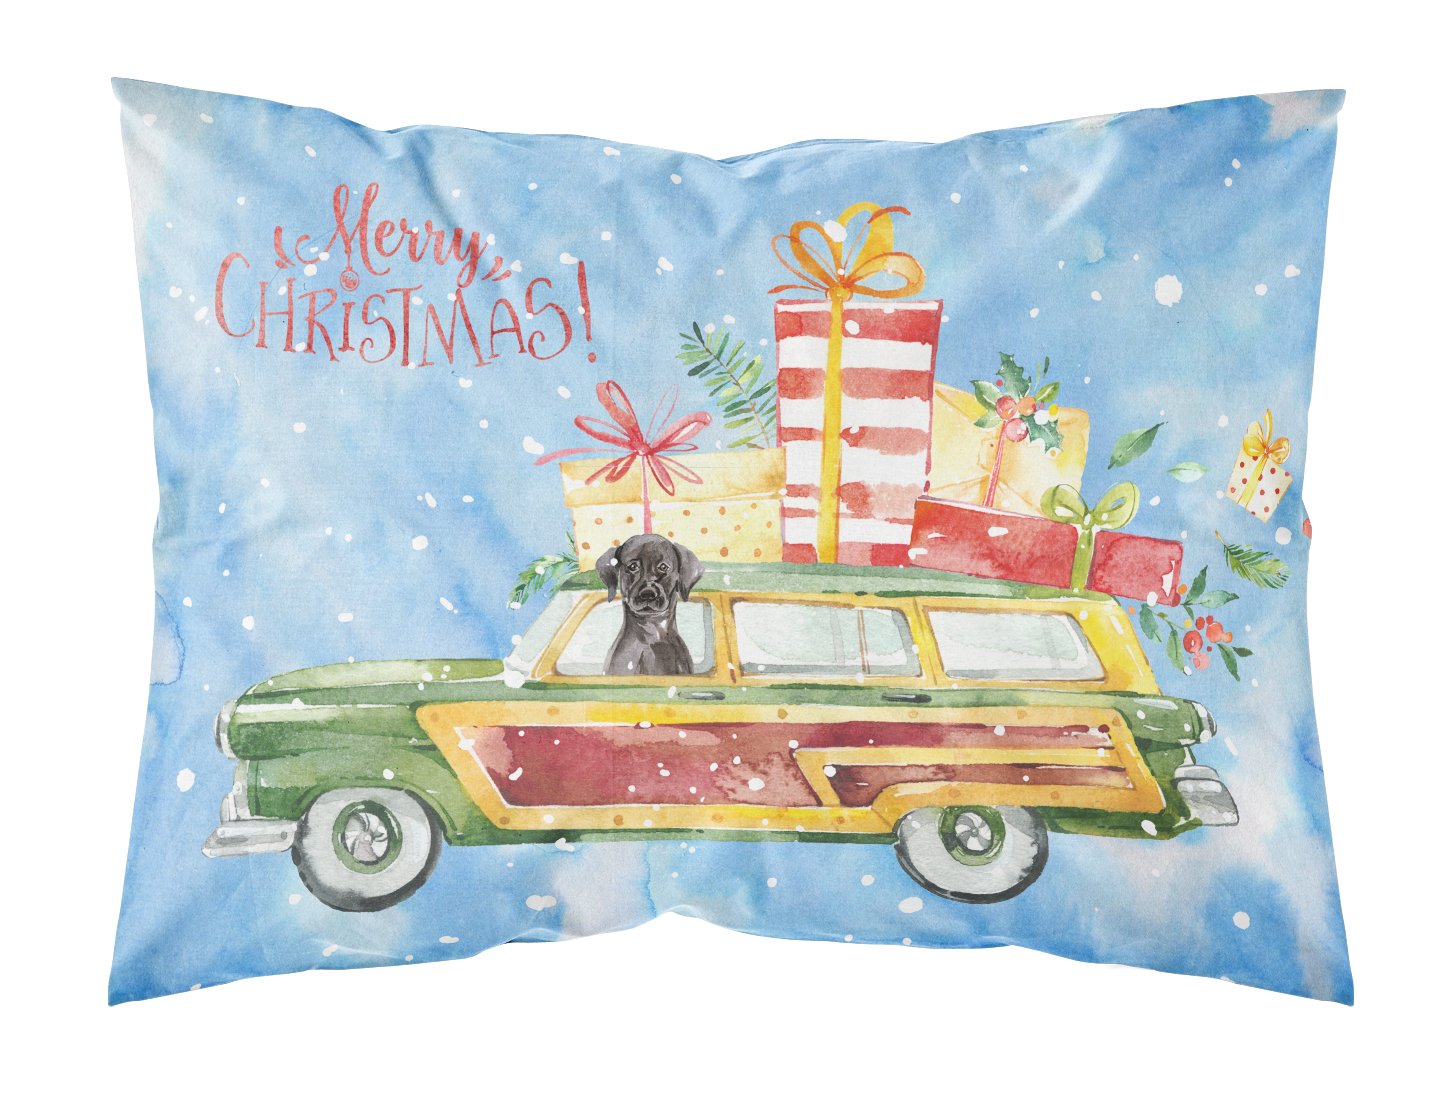 Merry Christmas Black Labrador Retriever Fabric Standard Pillowcase CK2435PILLOWCASE by Caroline's Treasures